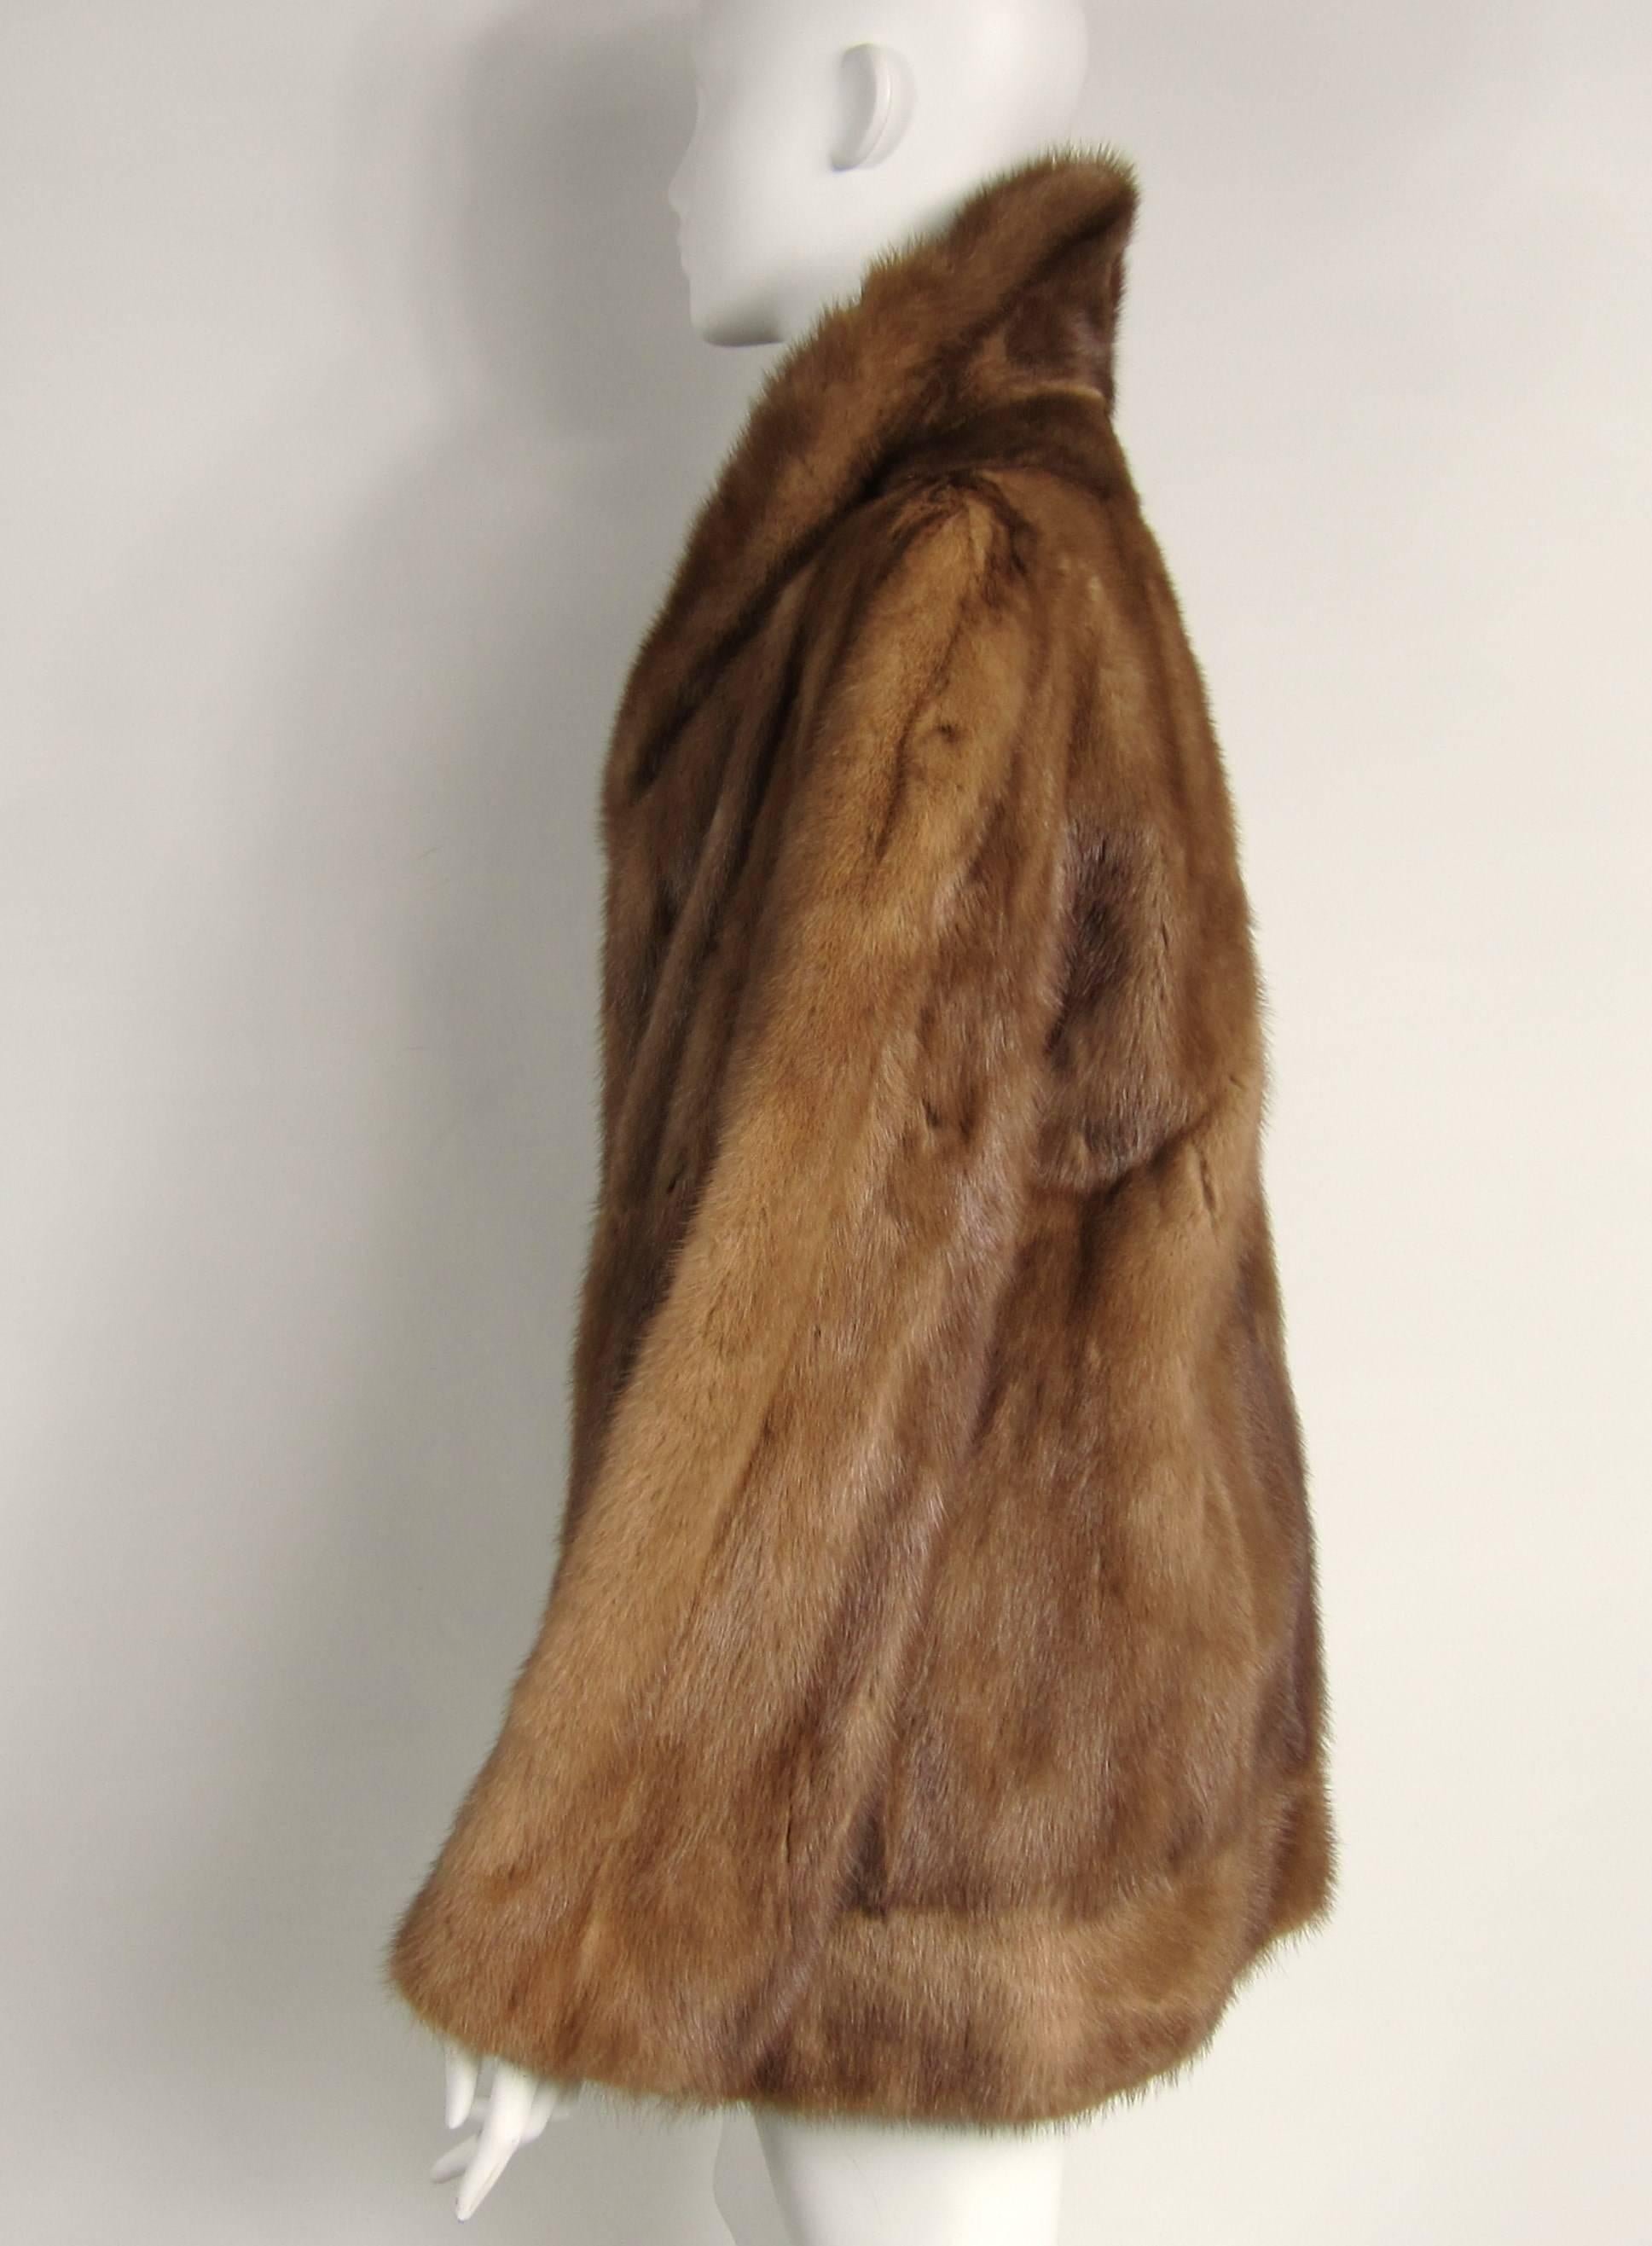  Pastel Mink Fur Jacket - 1960's Hollywood Glam Vintage (Braun)